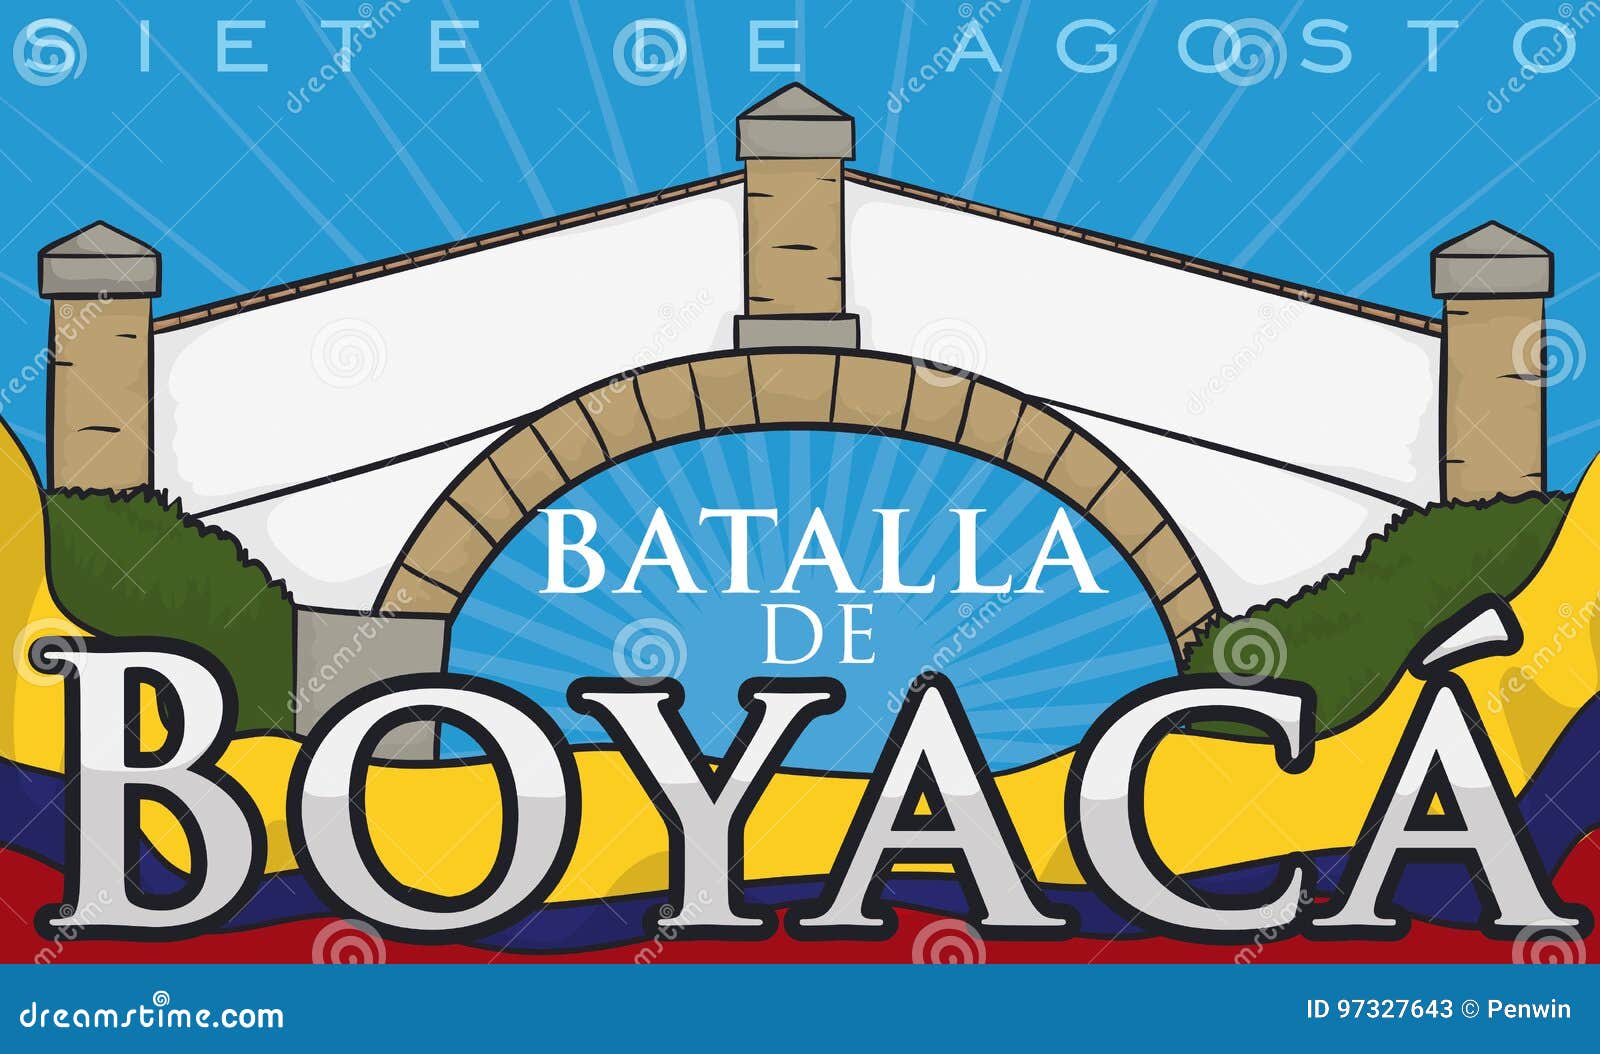 boyaca`s bridge a colombian landmark and flag for august 7,  